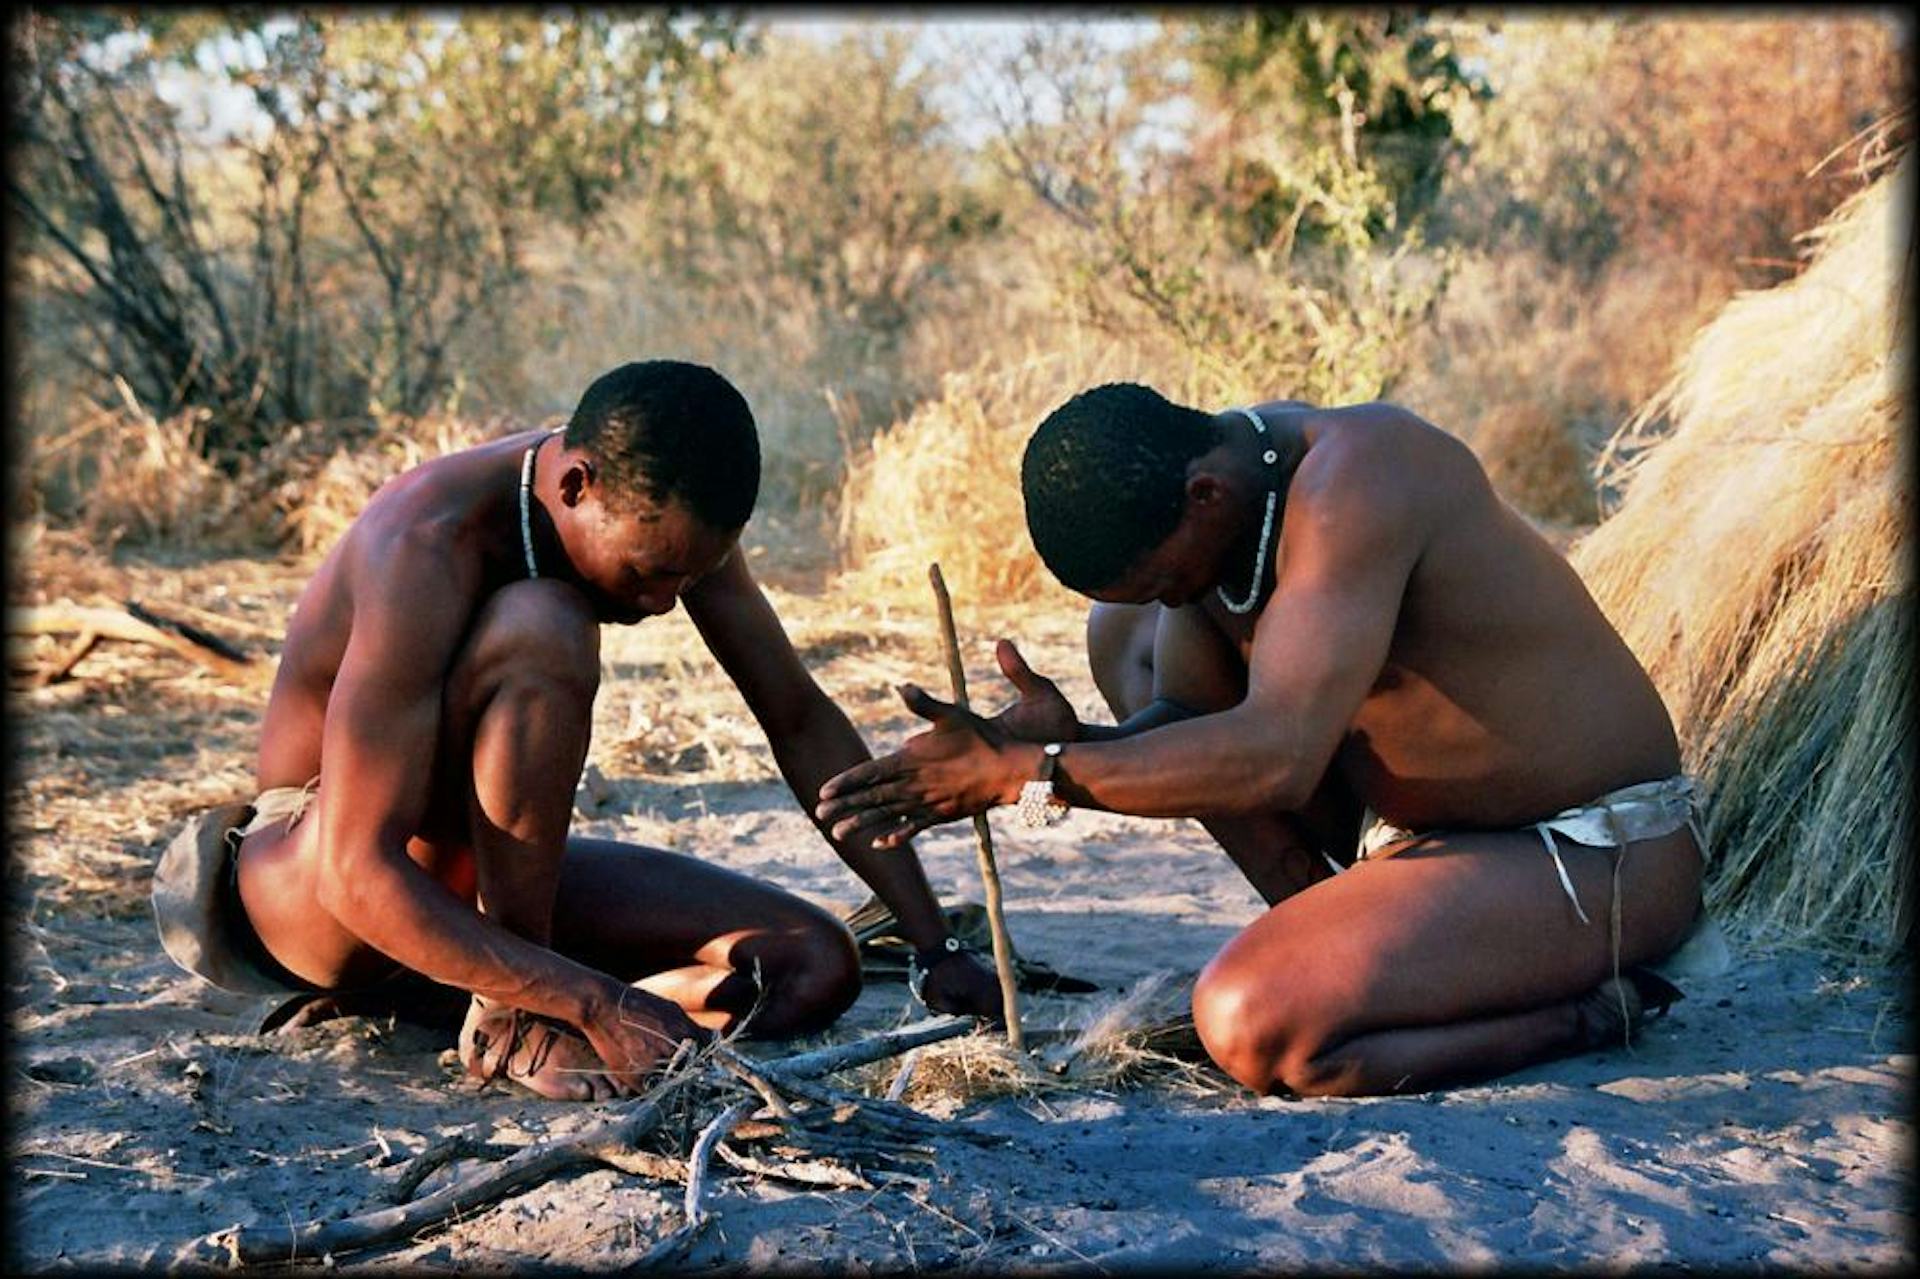 Bushmen in Deception Valley, by Ian Sewell, (2005).